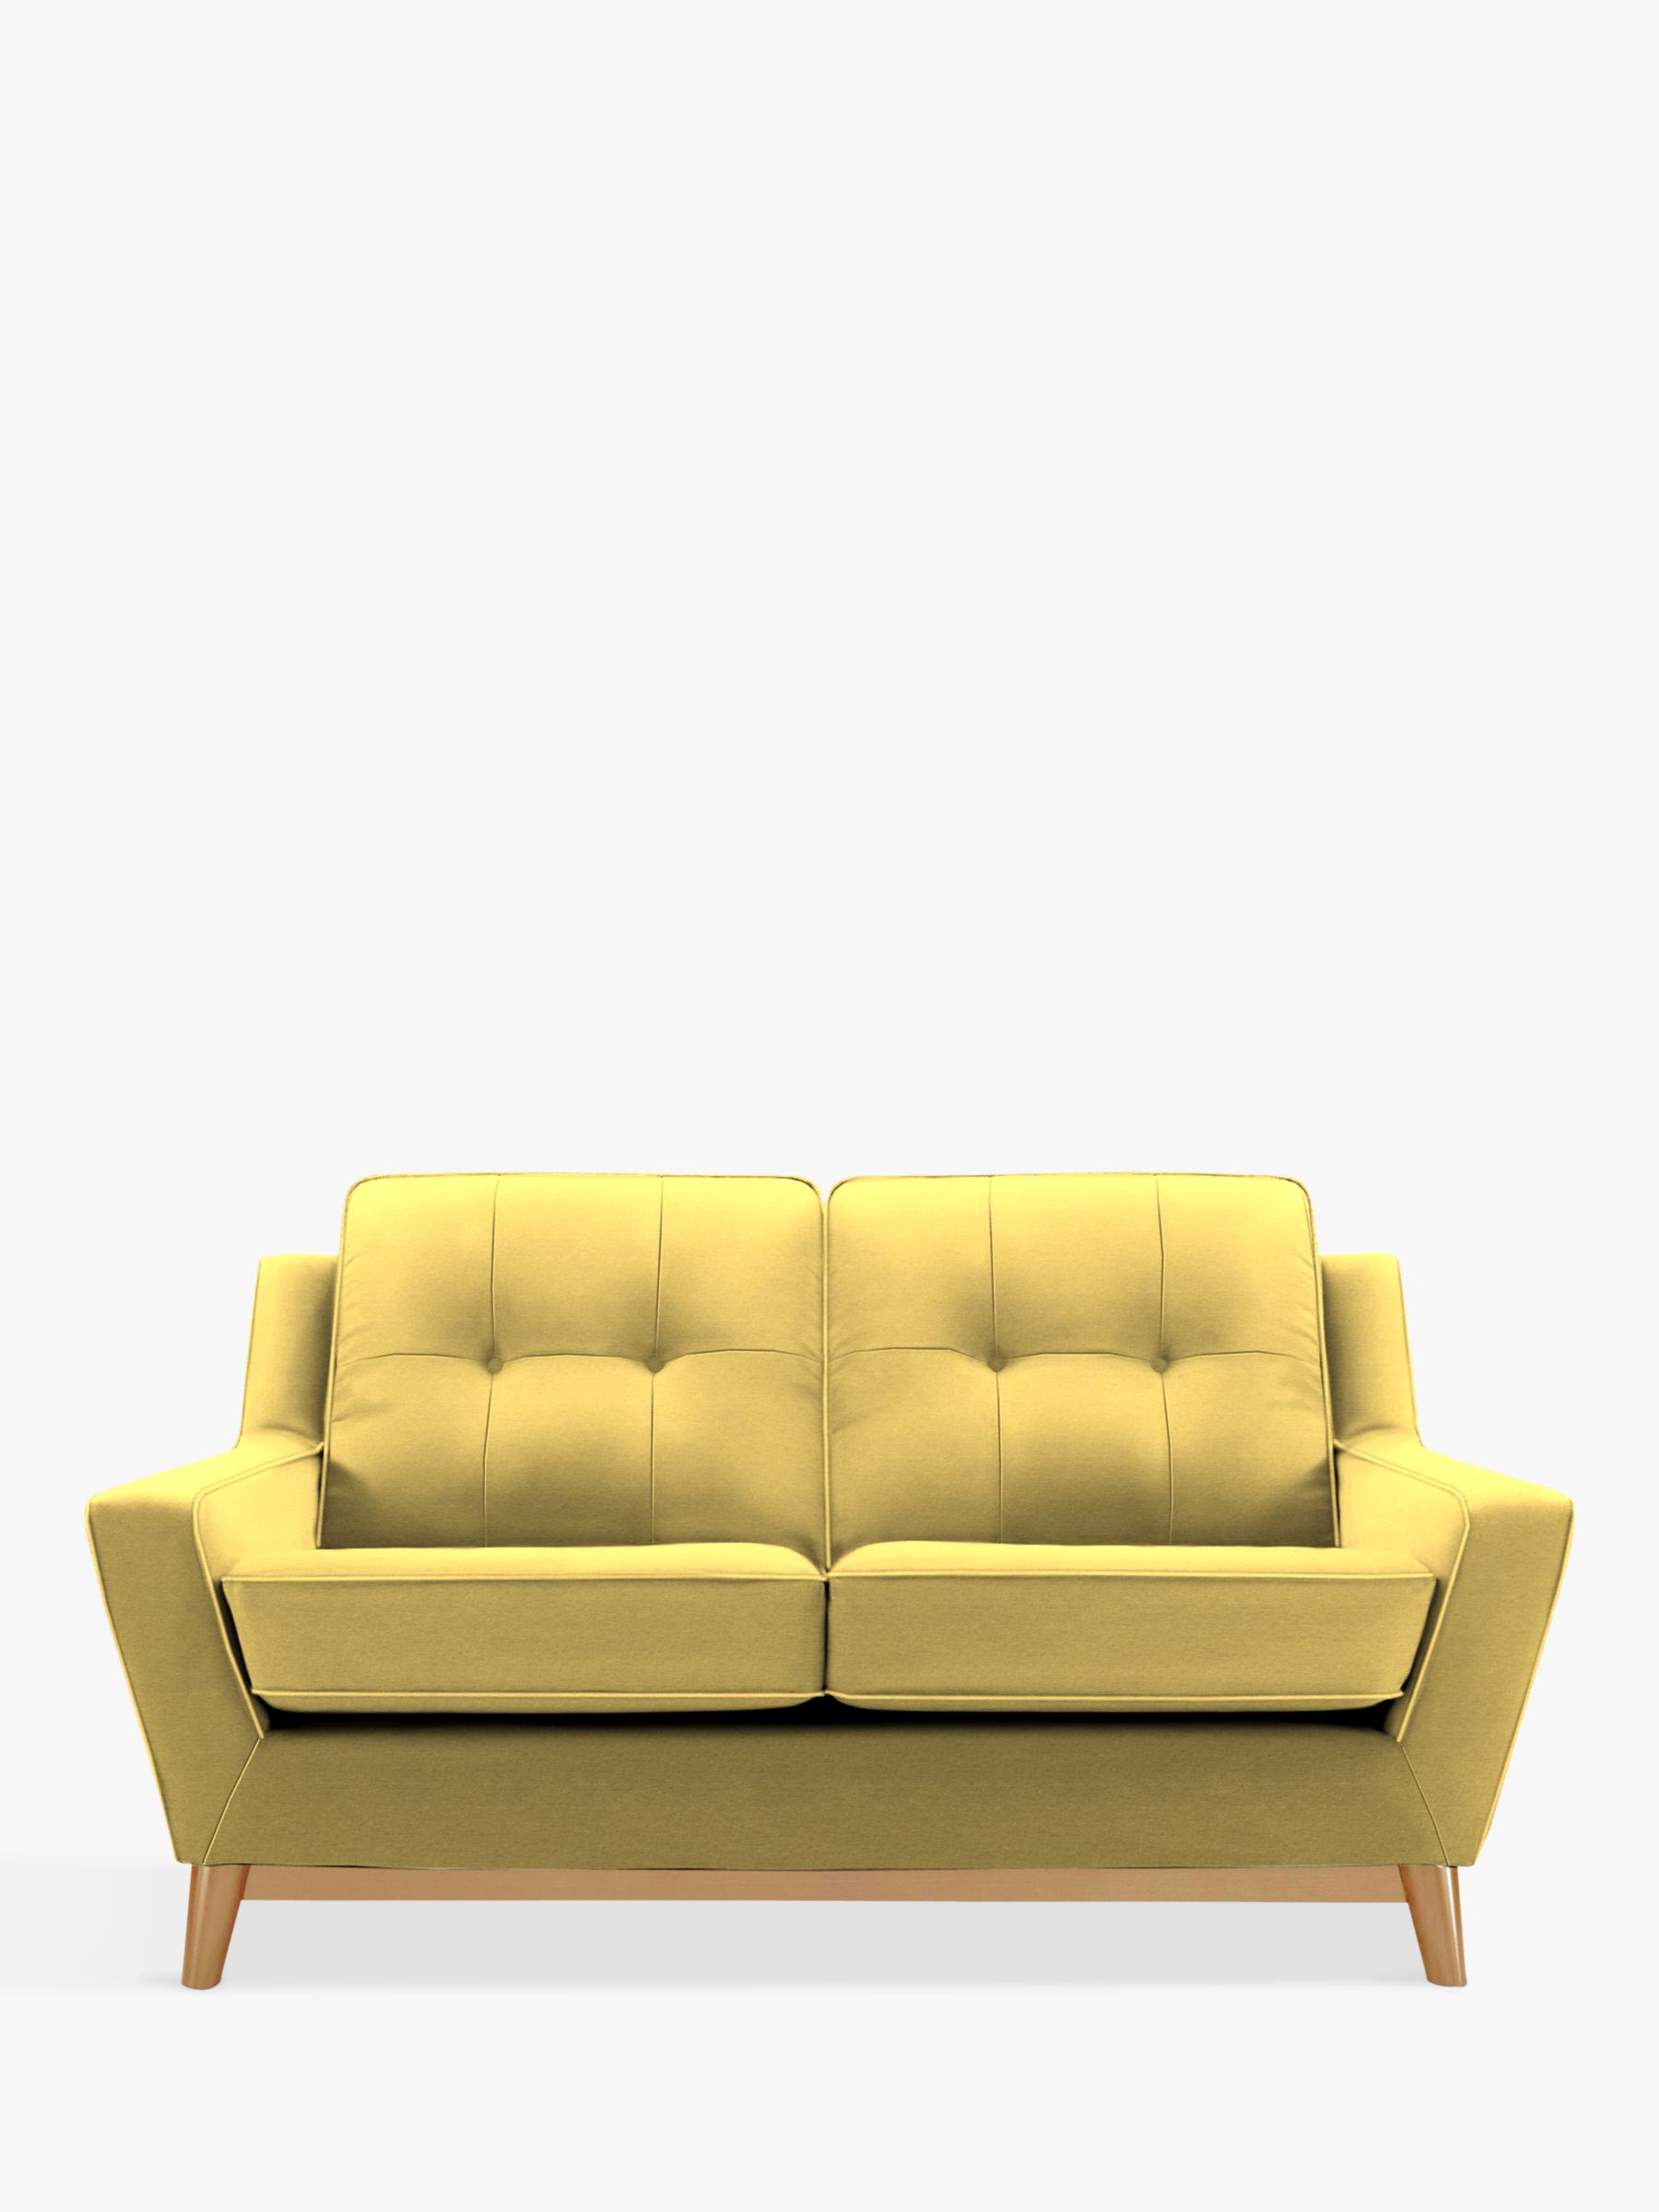 G Plan Vintage The Fifty Three Small Sofa, Tonic Mustard, width 159cm